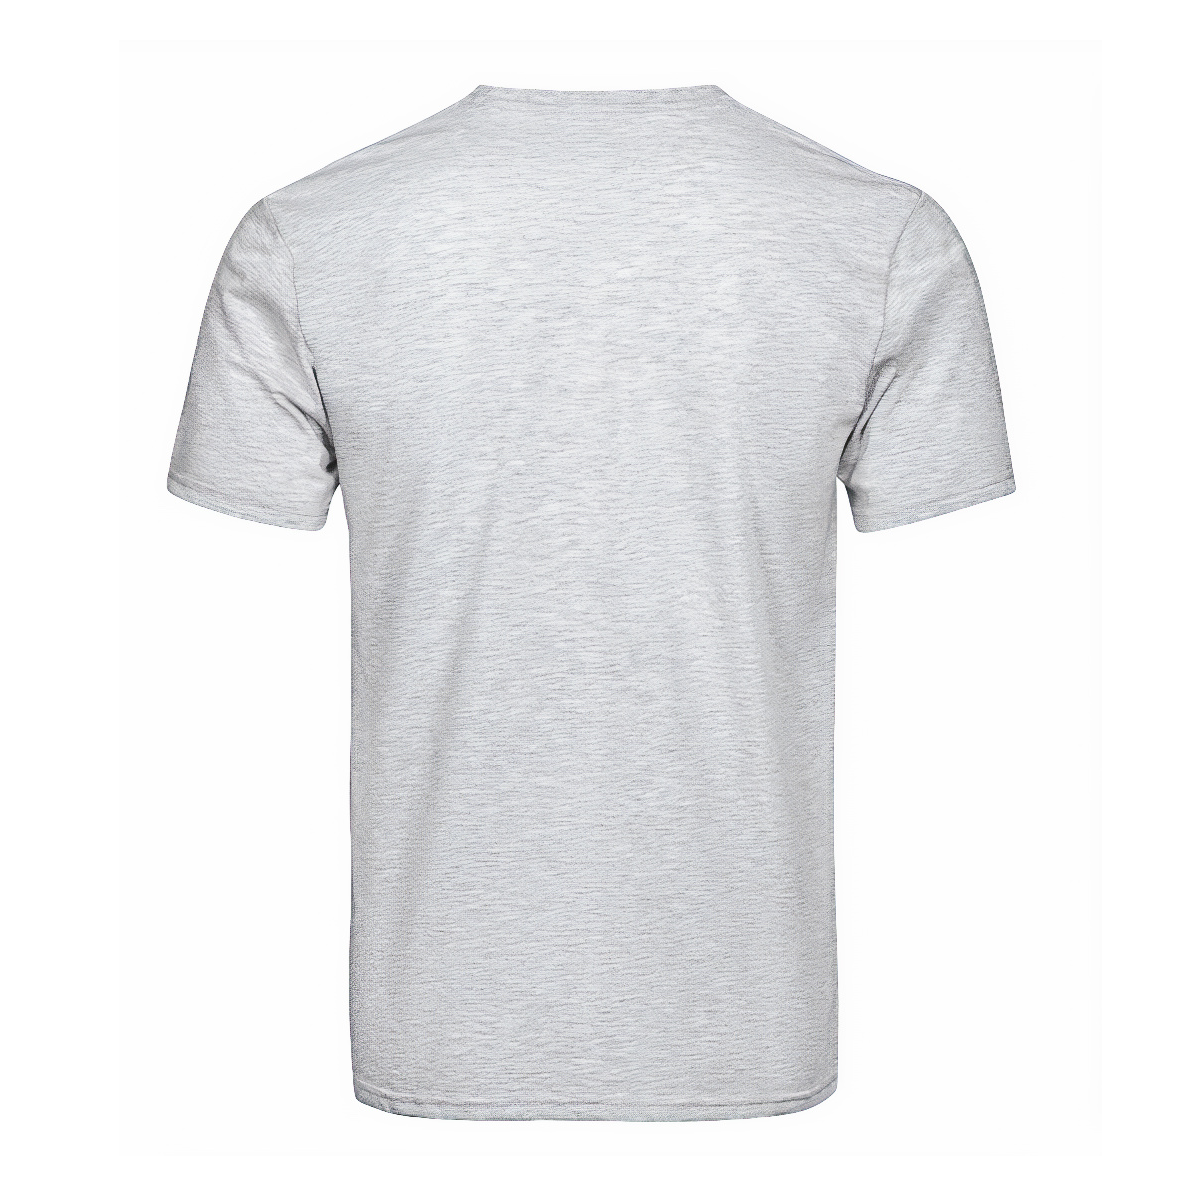 MacThomas Tartan Crest T-shirt - I'm not yelling style